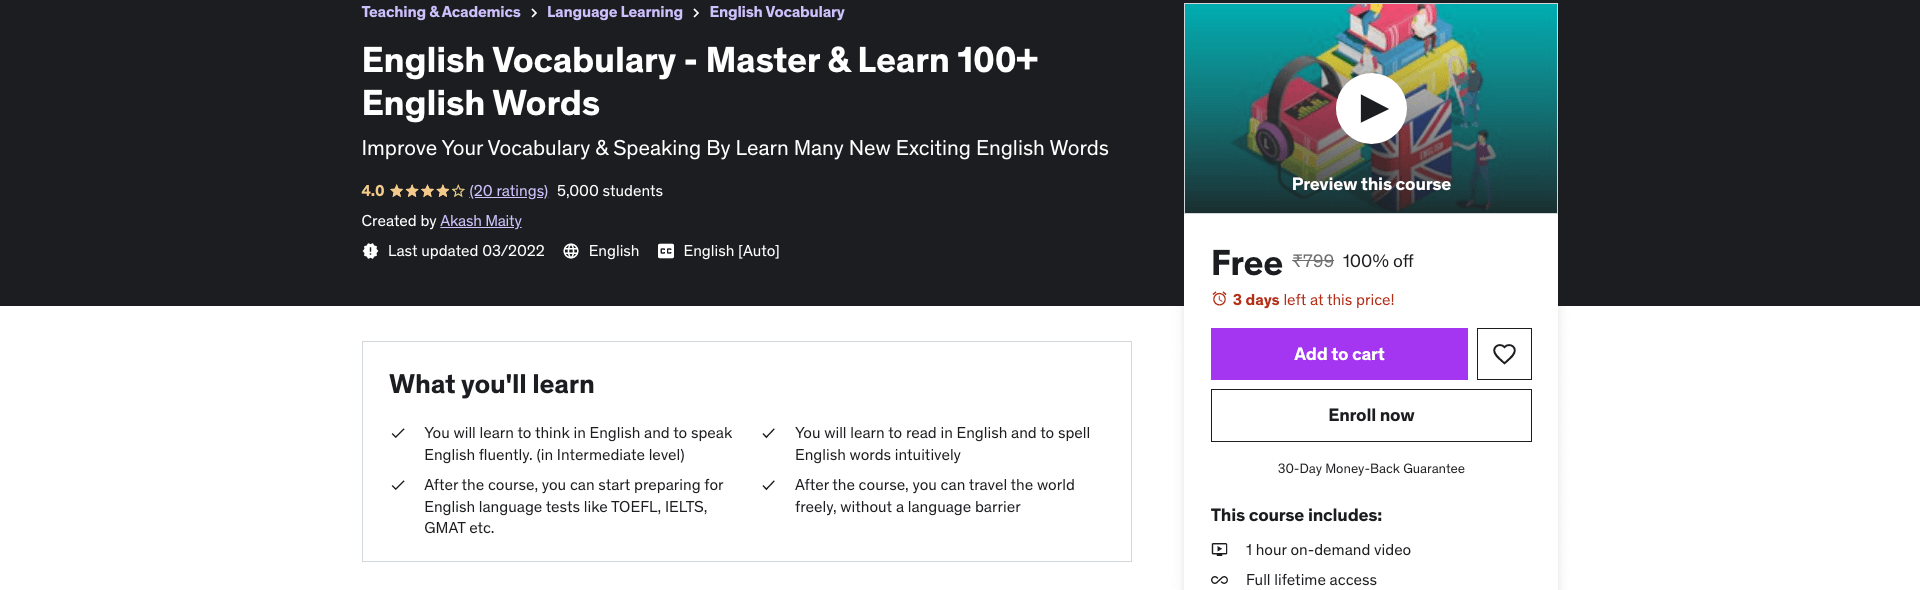 English Vocabulary - Master & Learn 100+ English Words